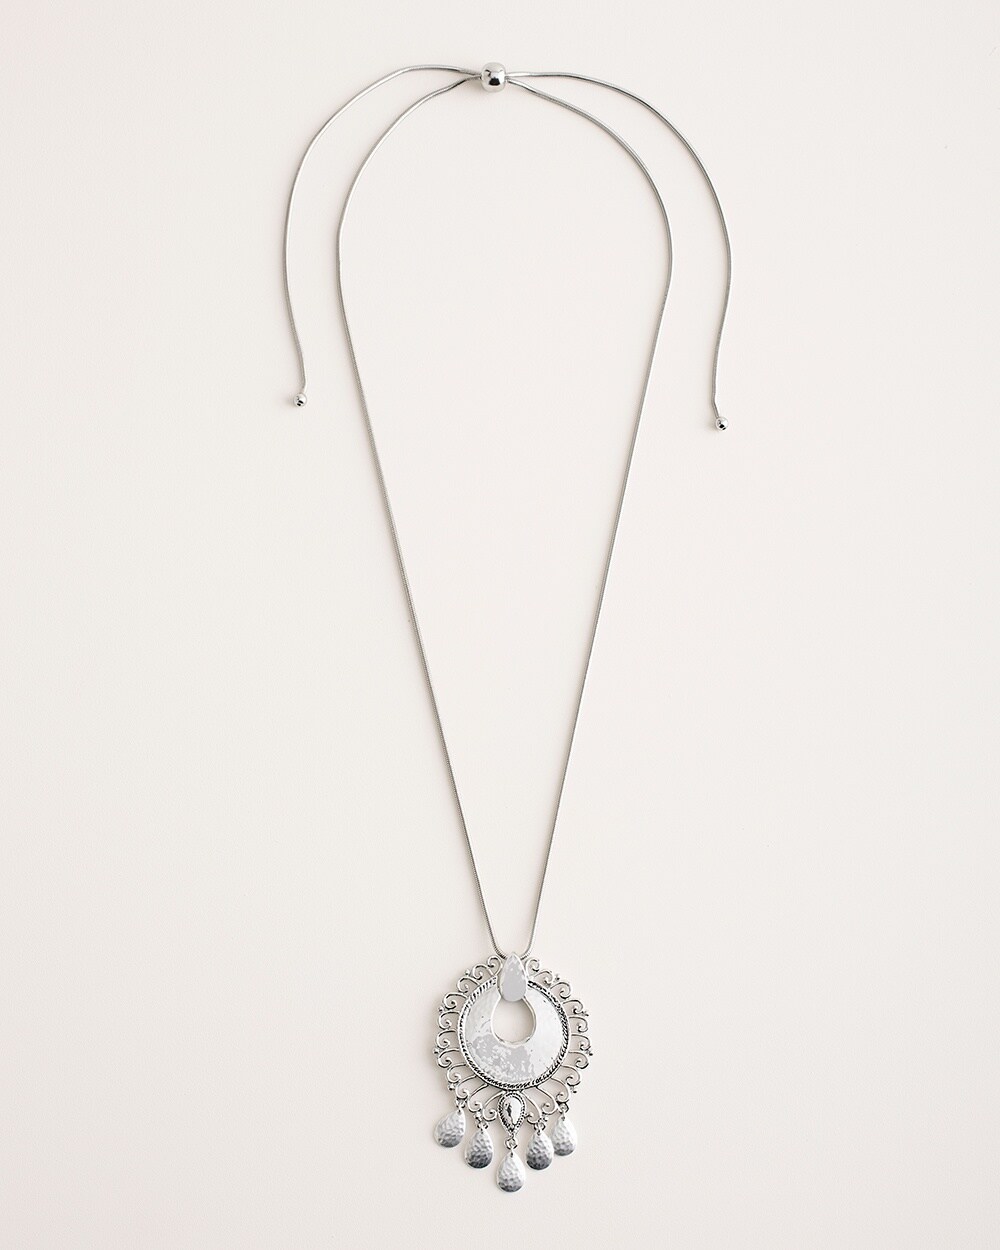 Convertible Sleek Silver-Tone Pendant Necklace